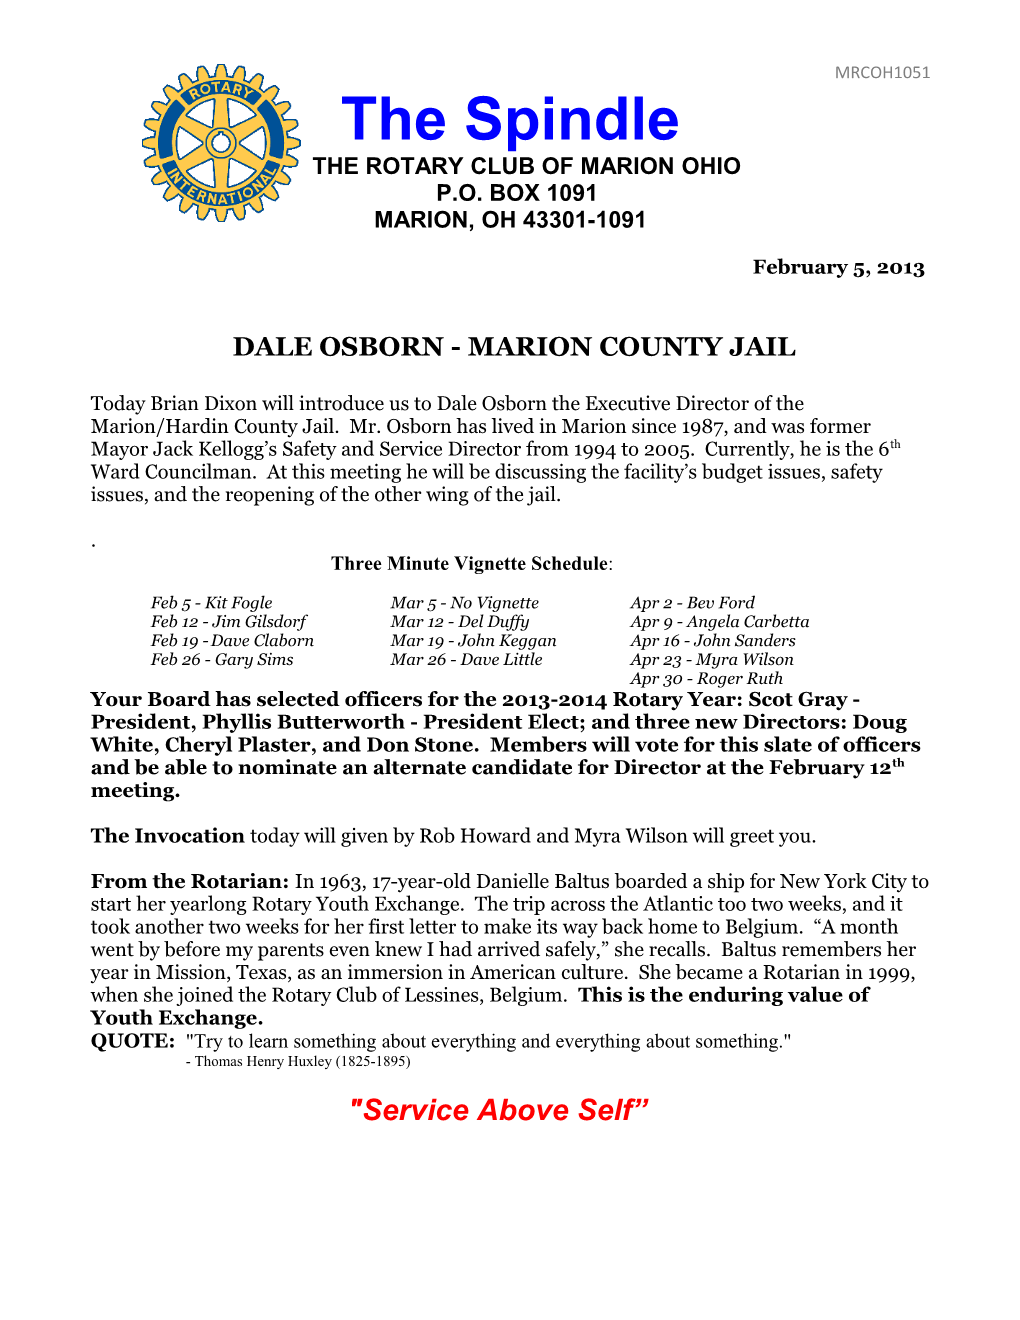 Dale Osborn-Marion County Jail